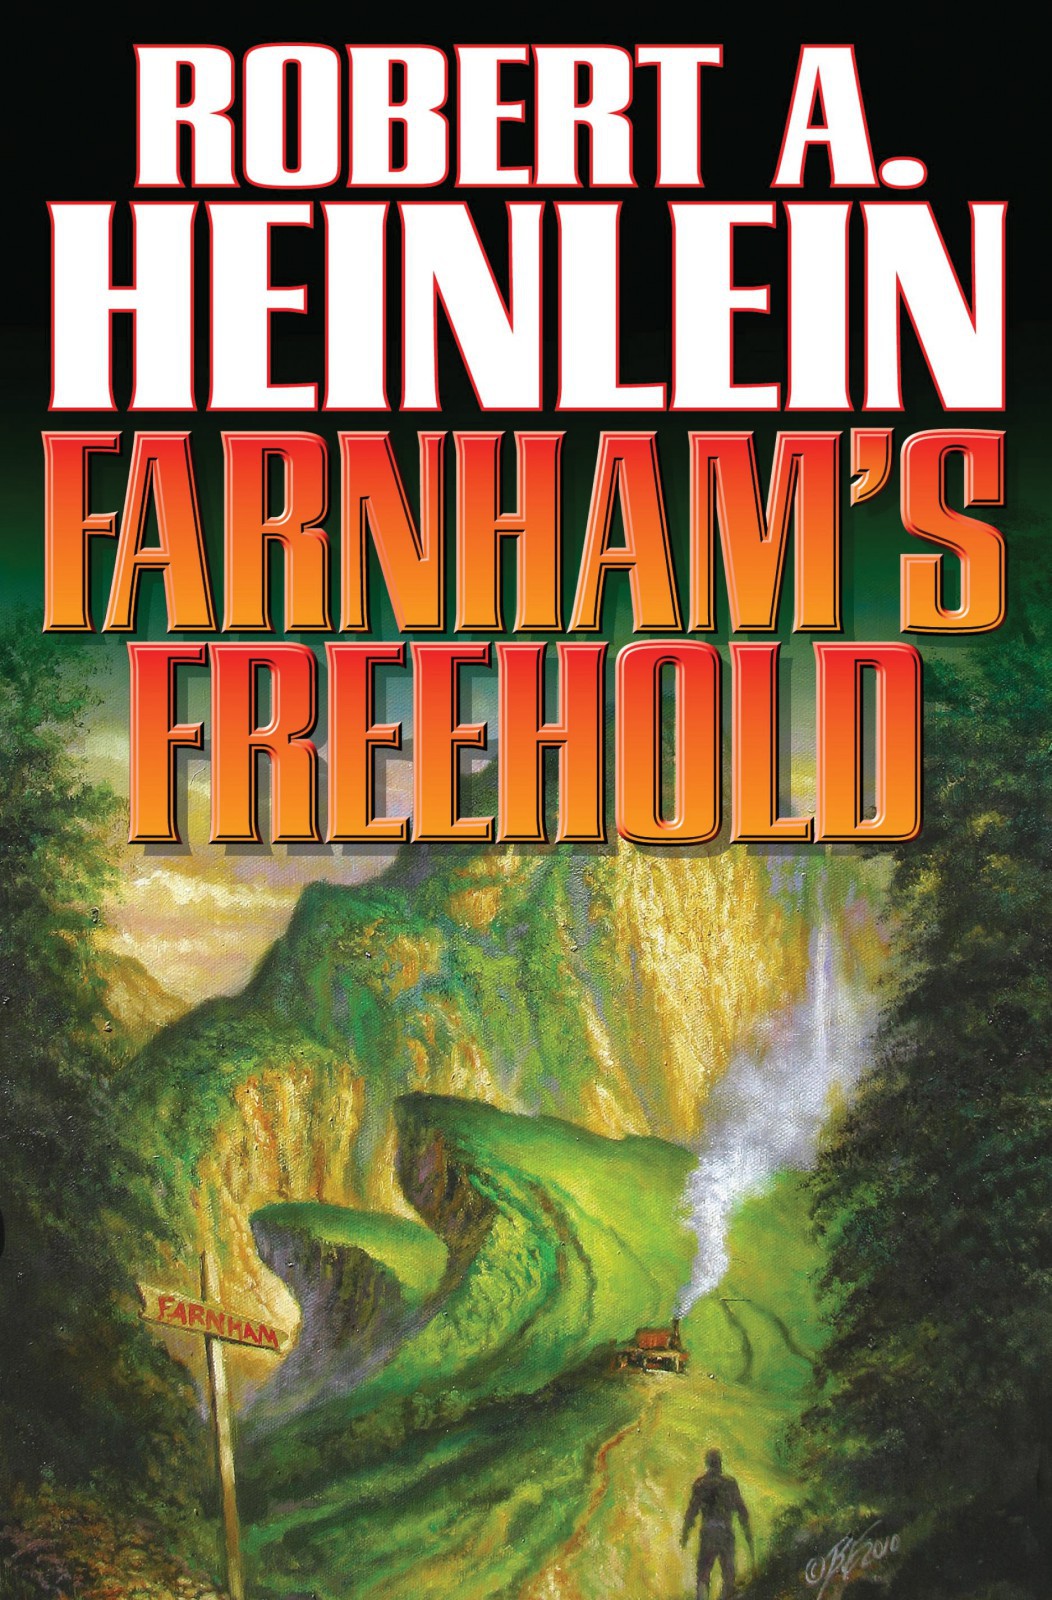 Robert A. Heinlein: Farnham's Freehold (2006, Baen)